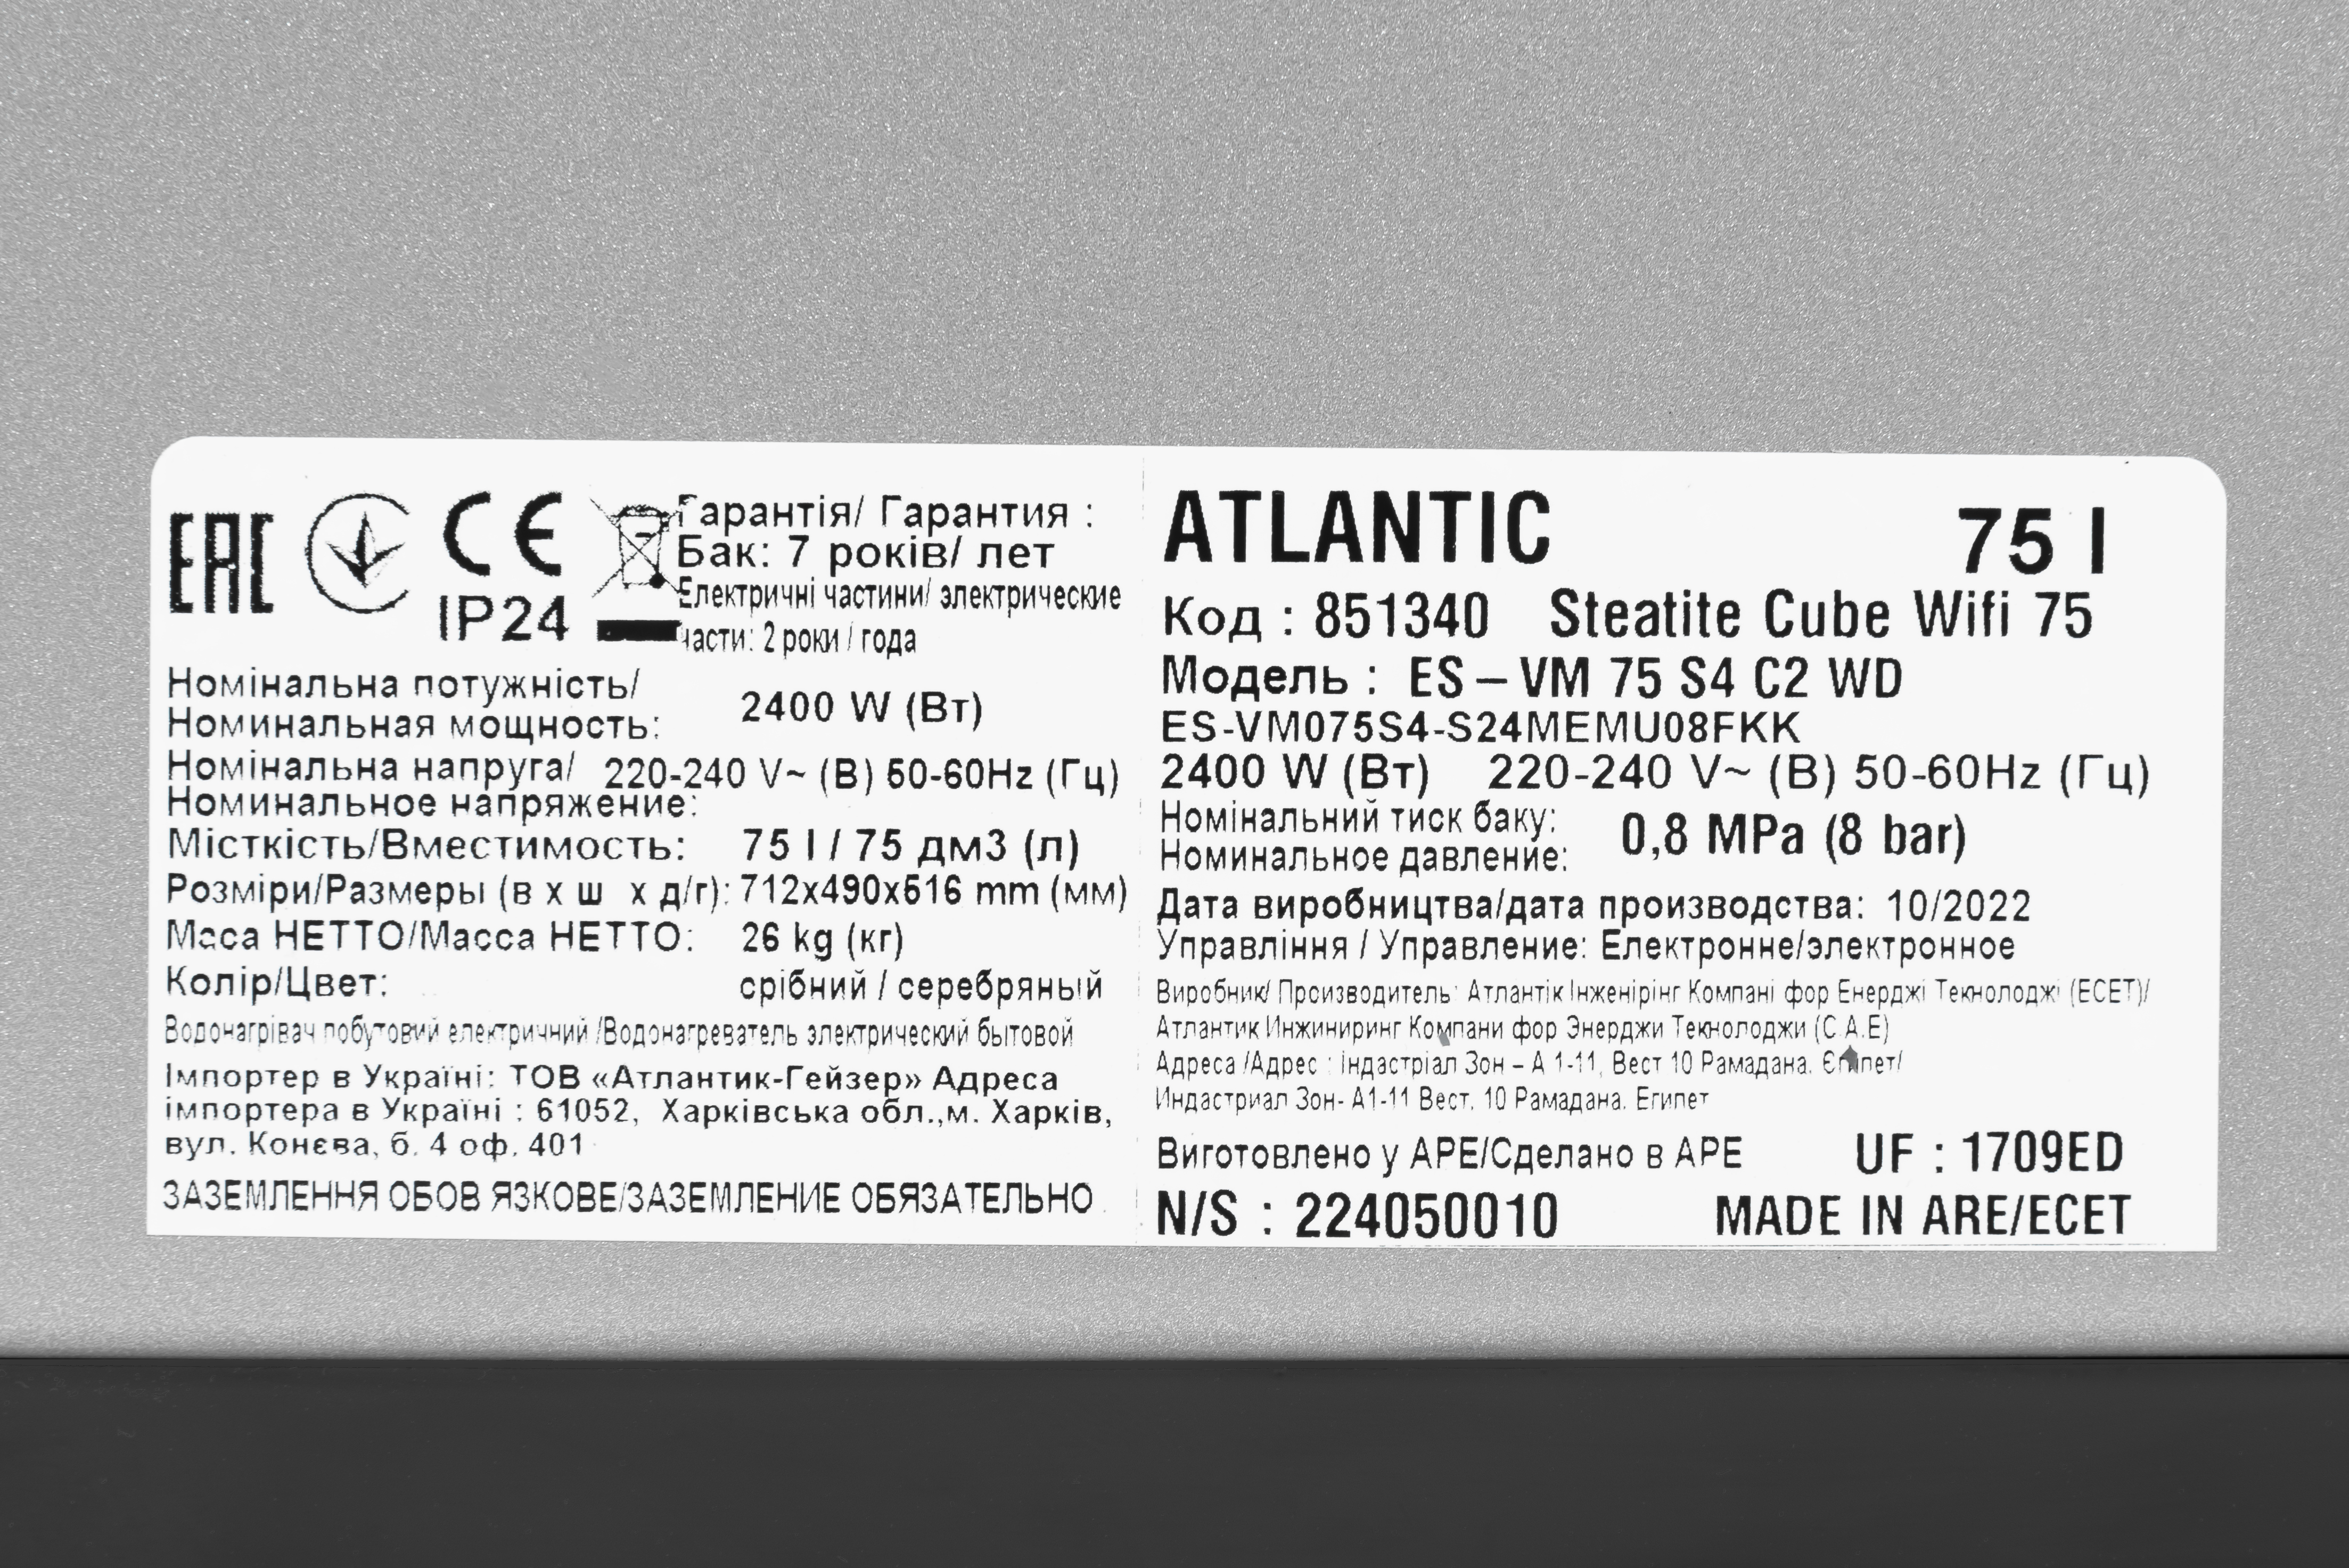 Бойлер Atlantic Steatite Cube WI-FI ES-VM 75 S4 C2 WD (2400W) silver отзывы - изображения 5